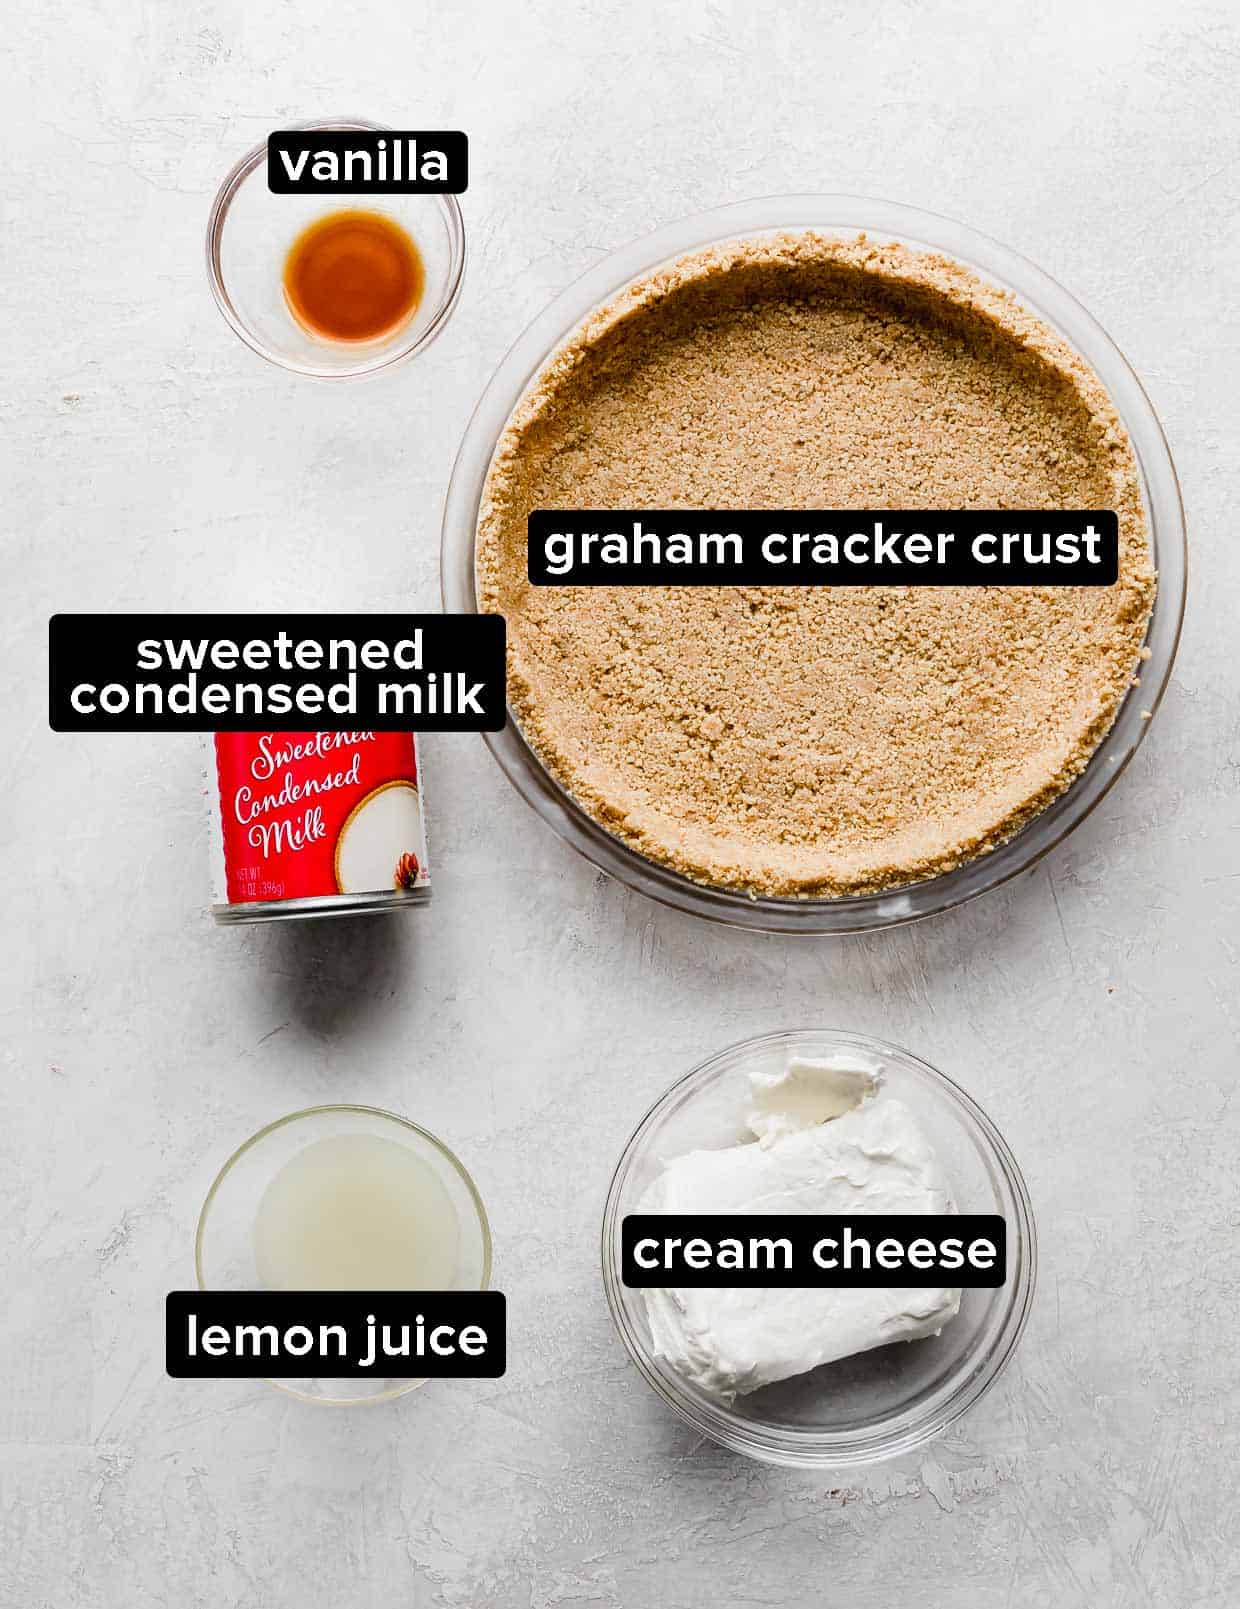 Ingredients used to make a no-bake cheesecake; cream cheese, lemon juice, vanilla, and condensed milk.